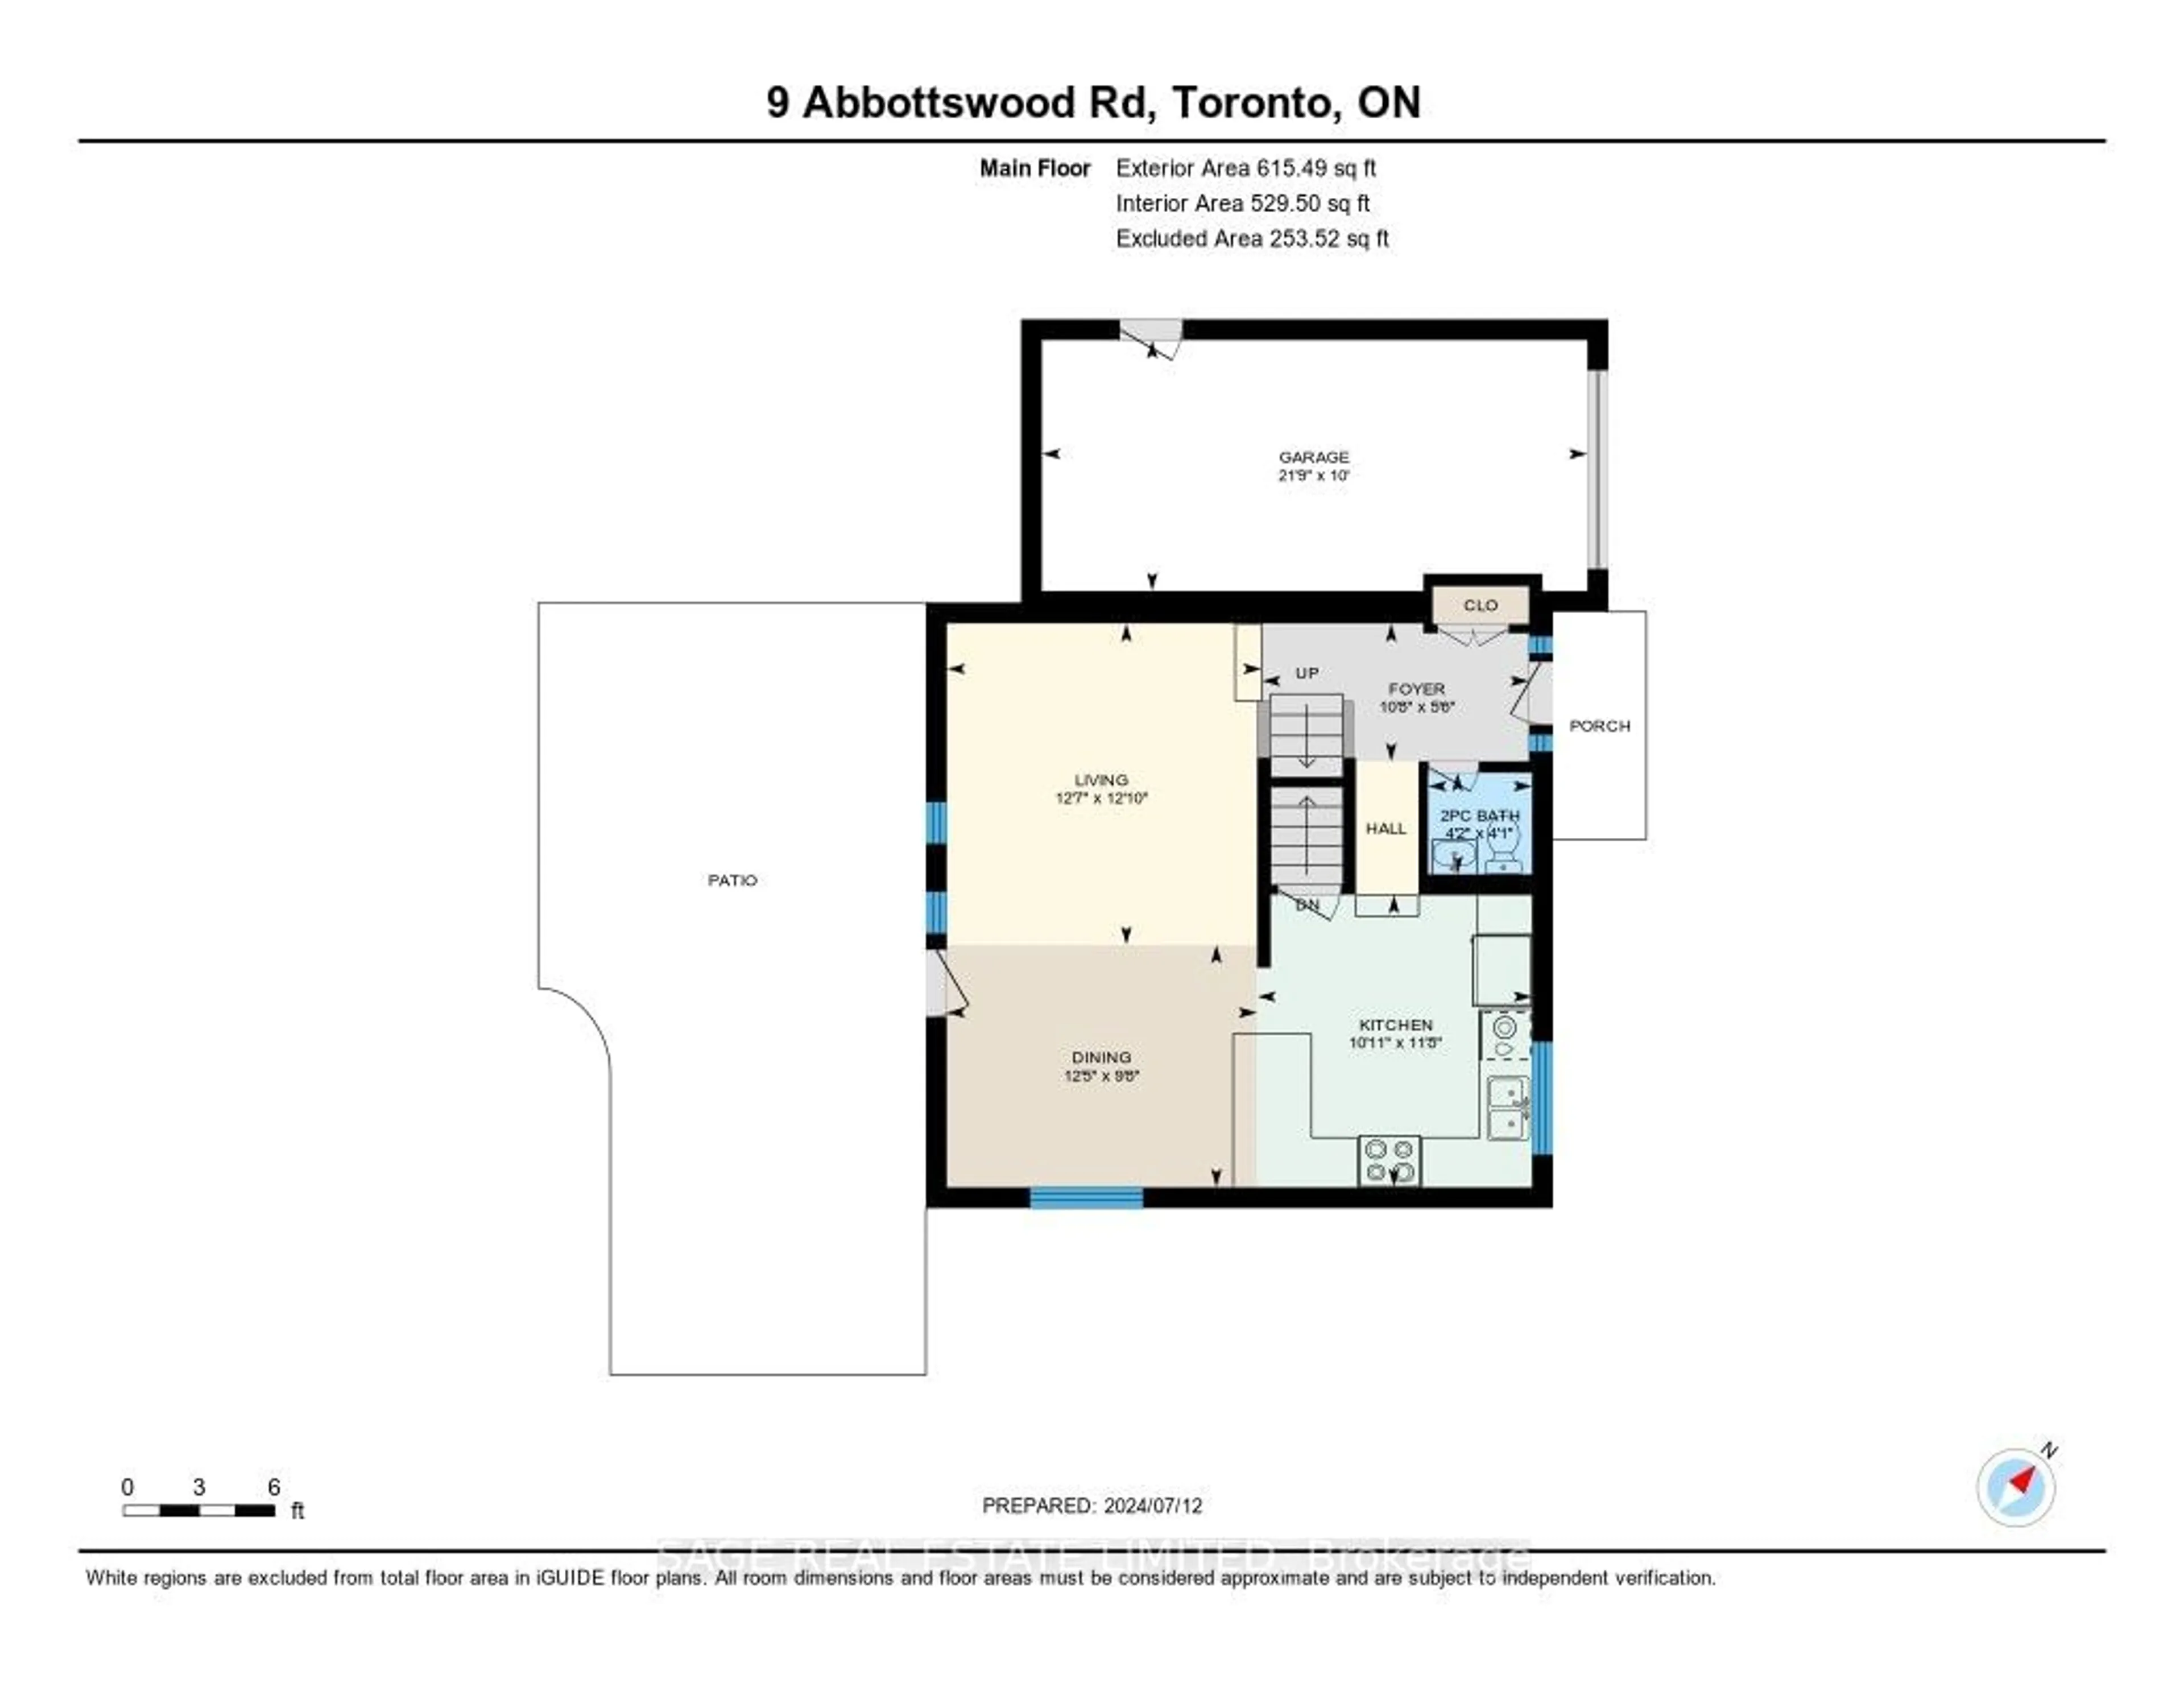 Floor plan for 9 Abbottswood Rd, Toronto Ontario M1P 3N9